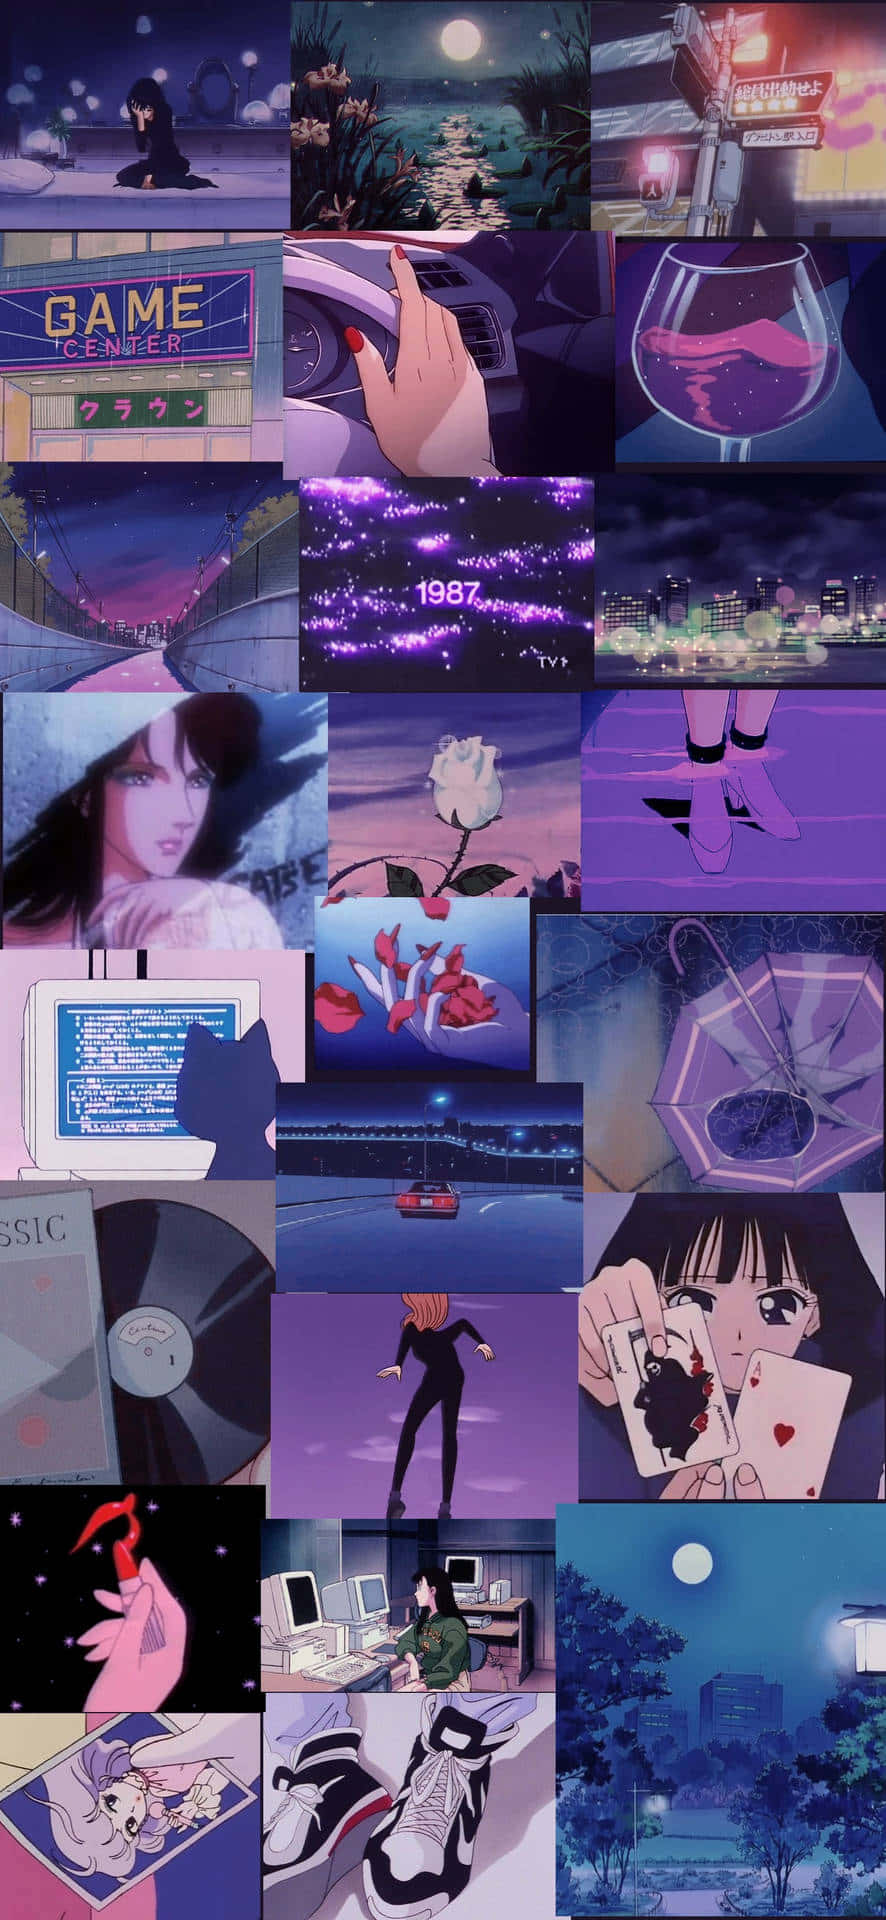 Descubrela Belleza Del Anime En Este Collage Único Y Colorido. Fondo de pantalla